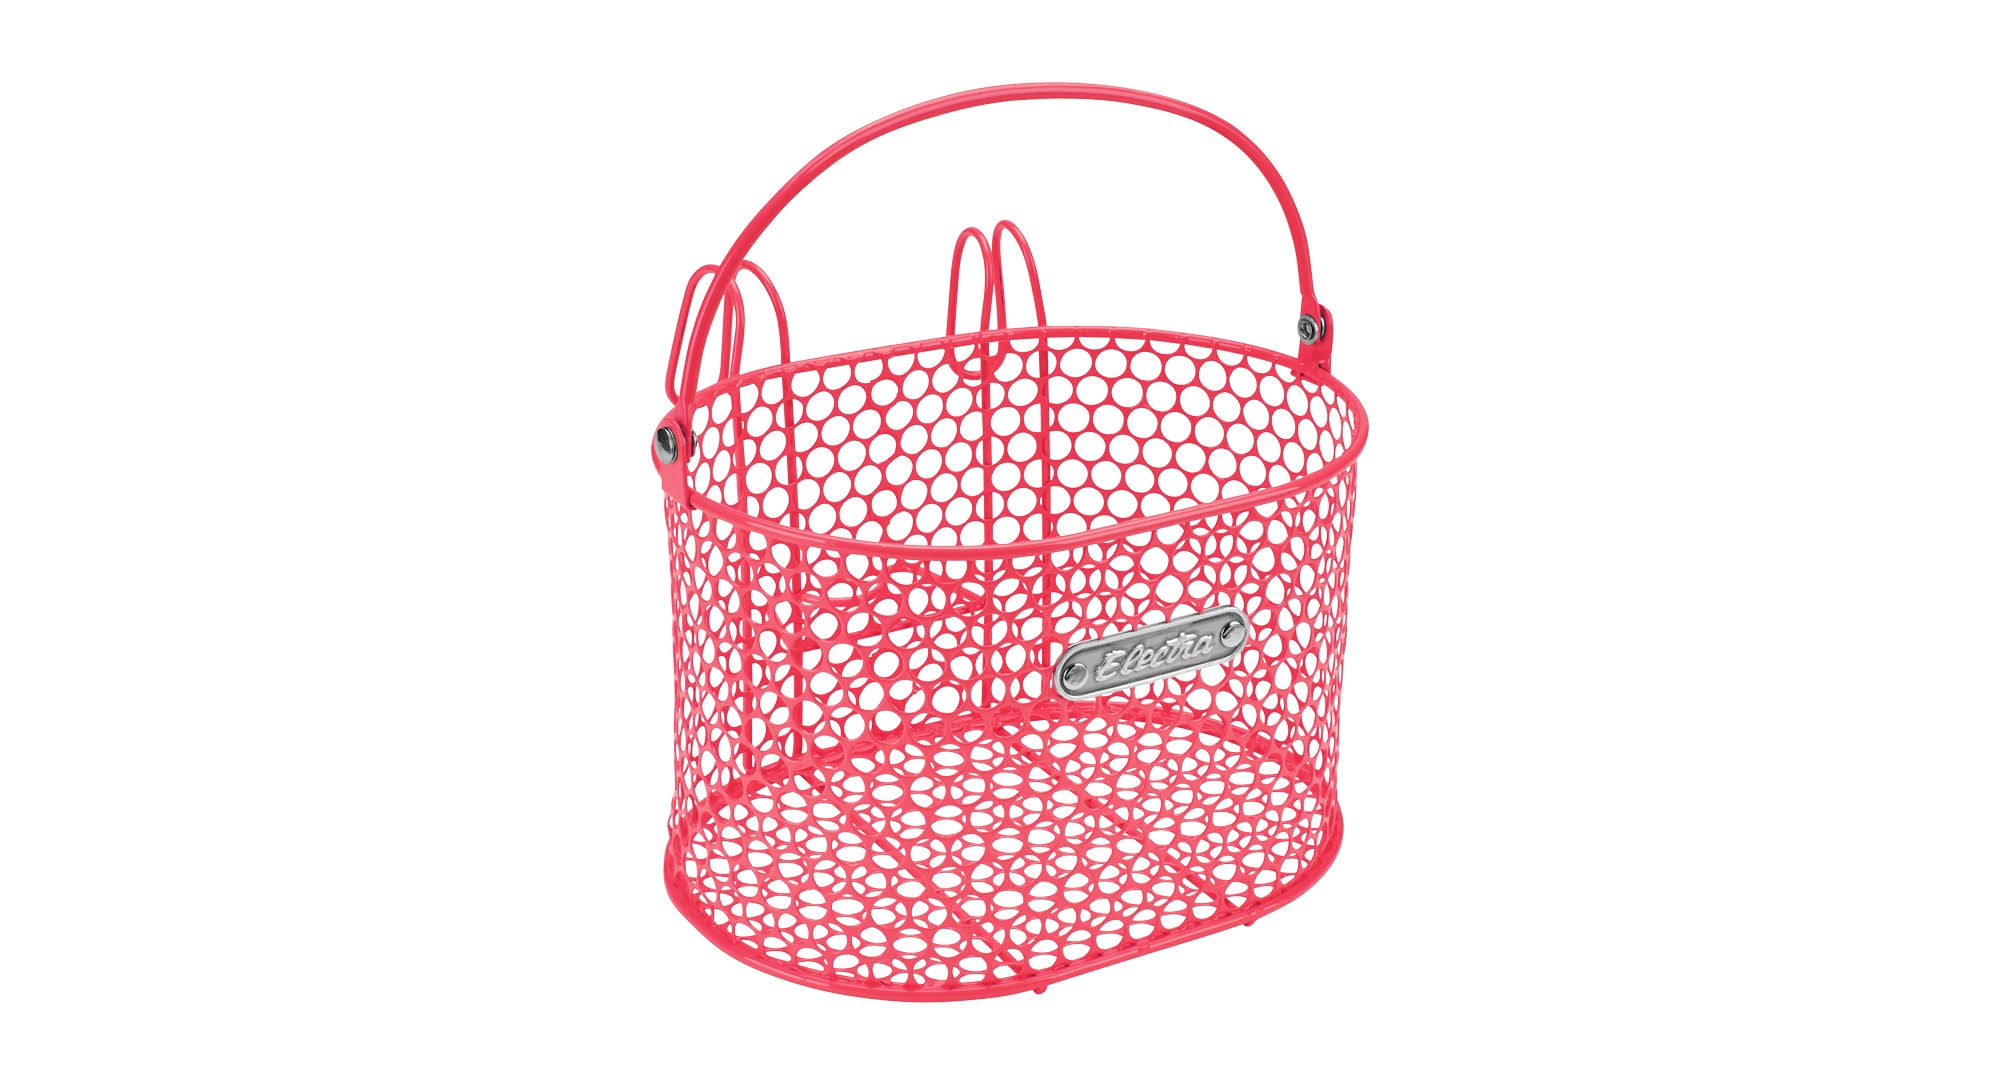 Electra Honeycomb Small Hook-Mounted Handlebar Basket